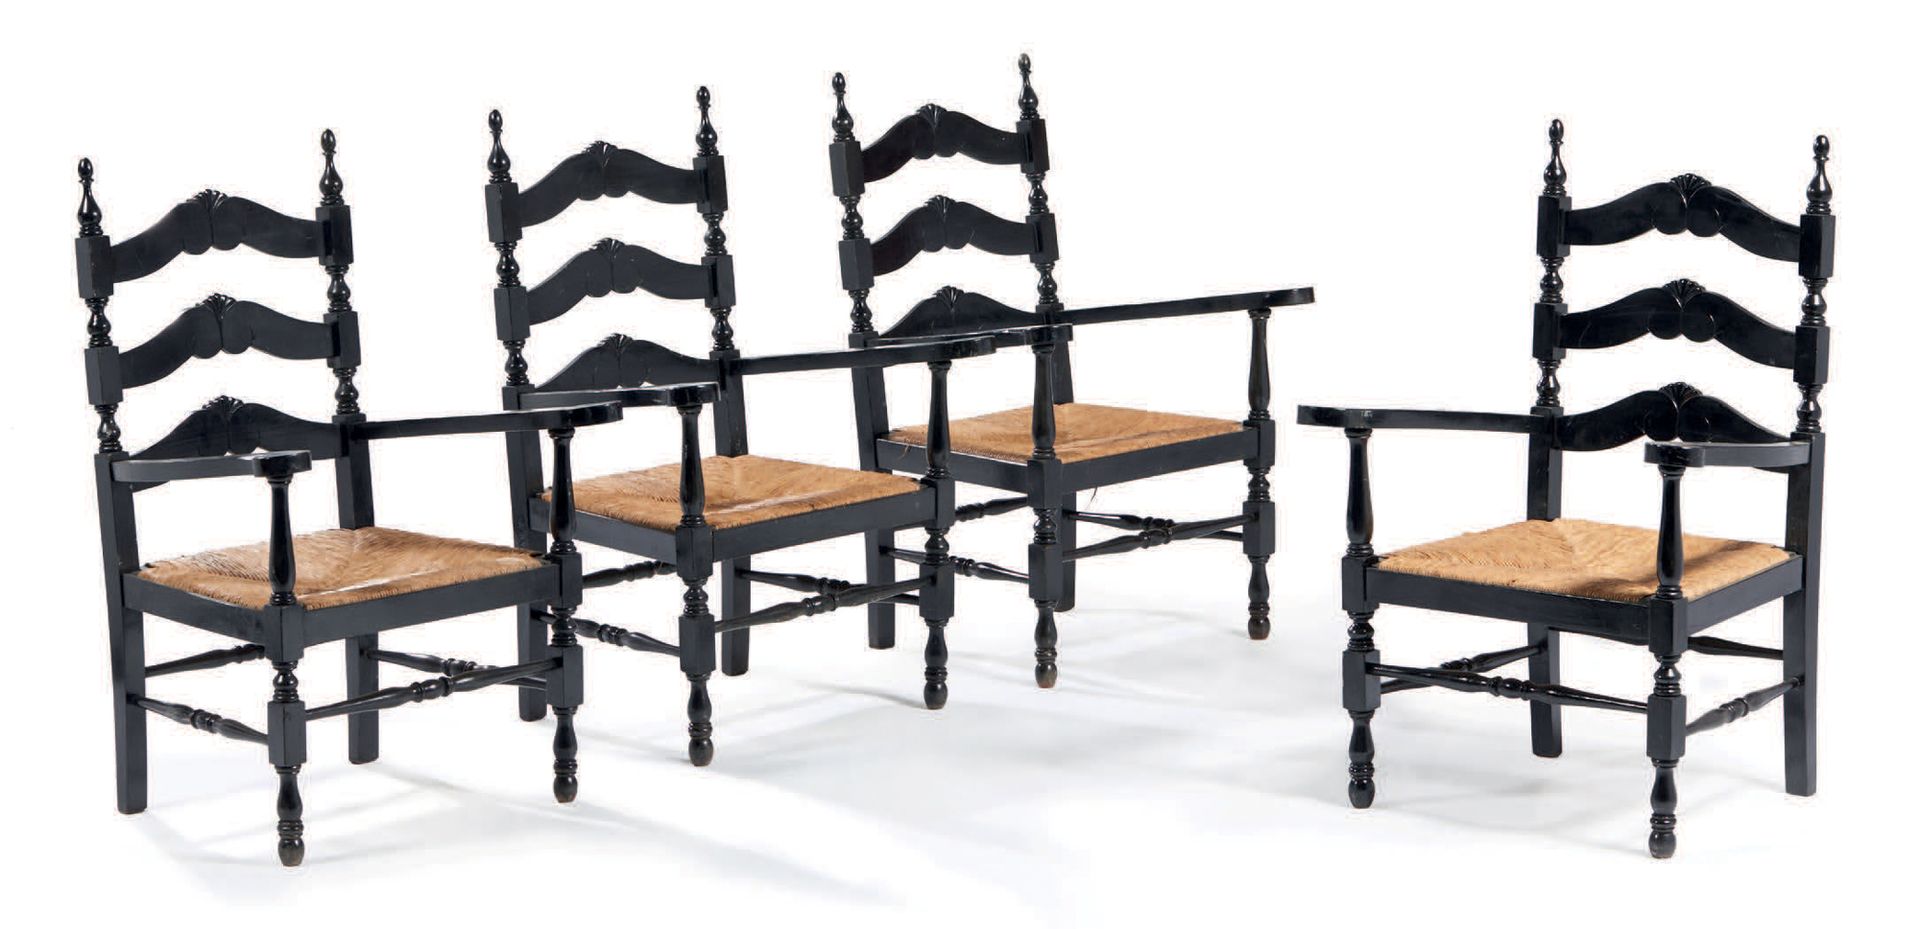 TRAVAIL FRANÇAIS 一套四把低矮的扶手椅，黑色漆面，草编座椅
高：89 宽：61.5 深：53 厘米